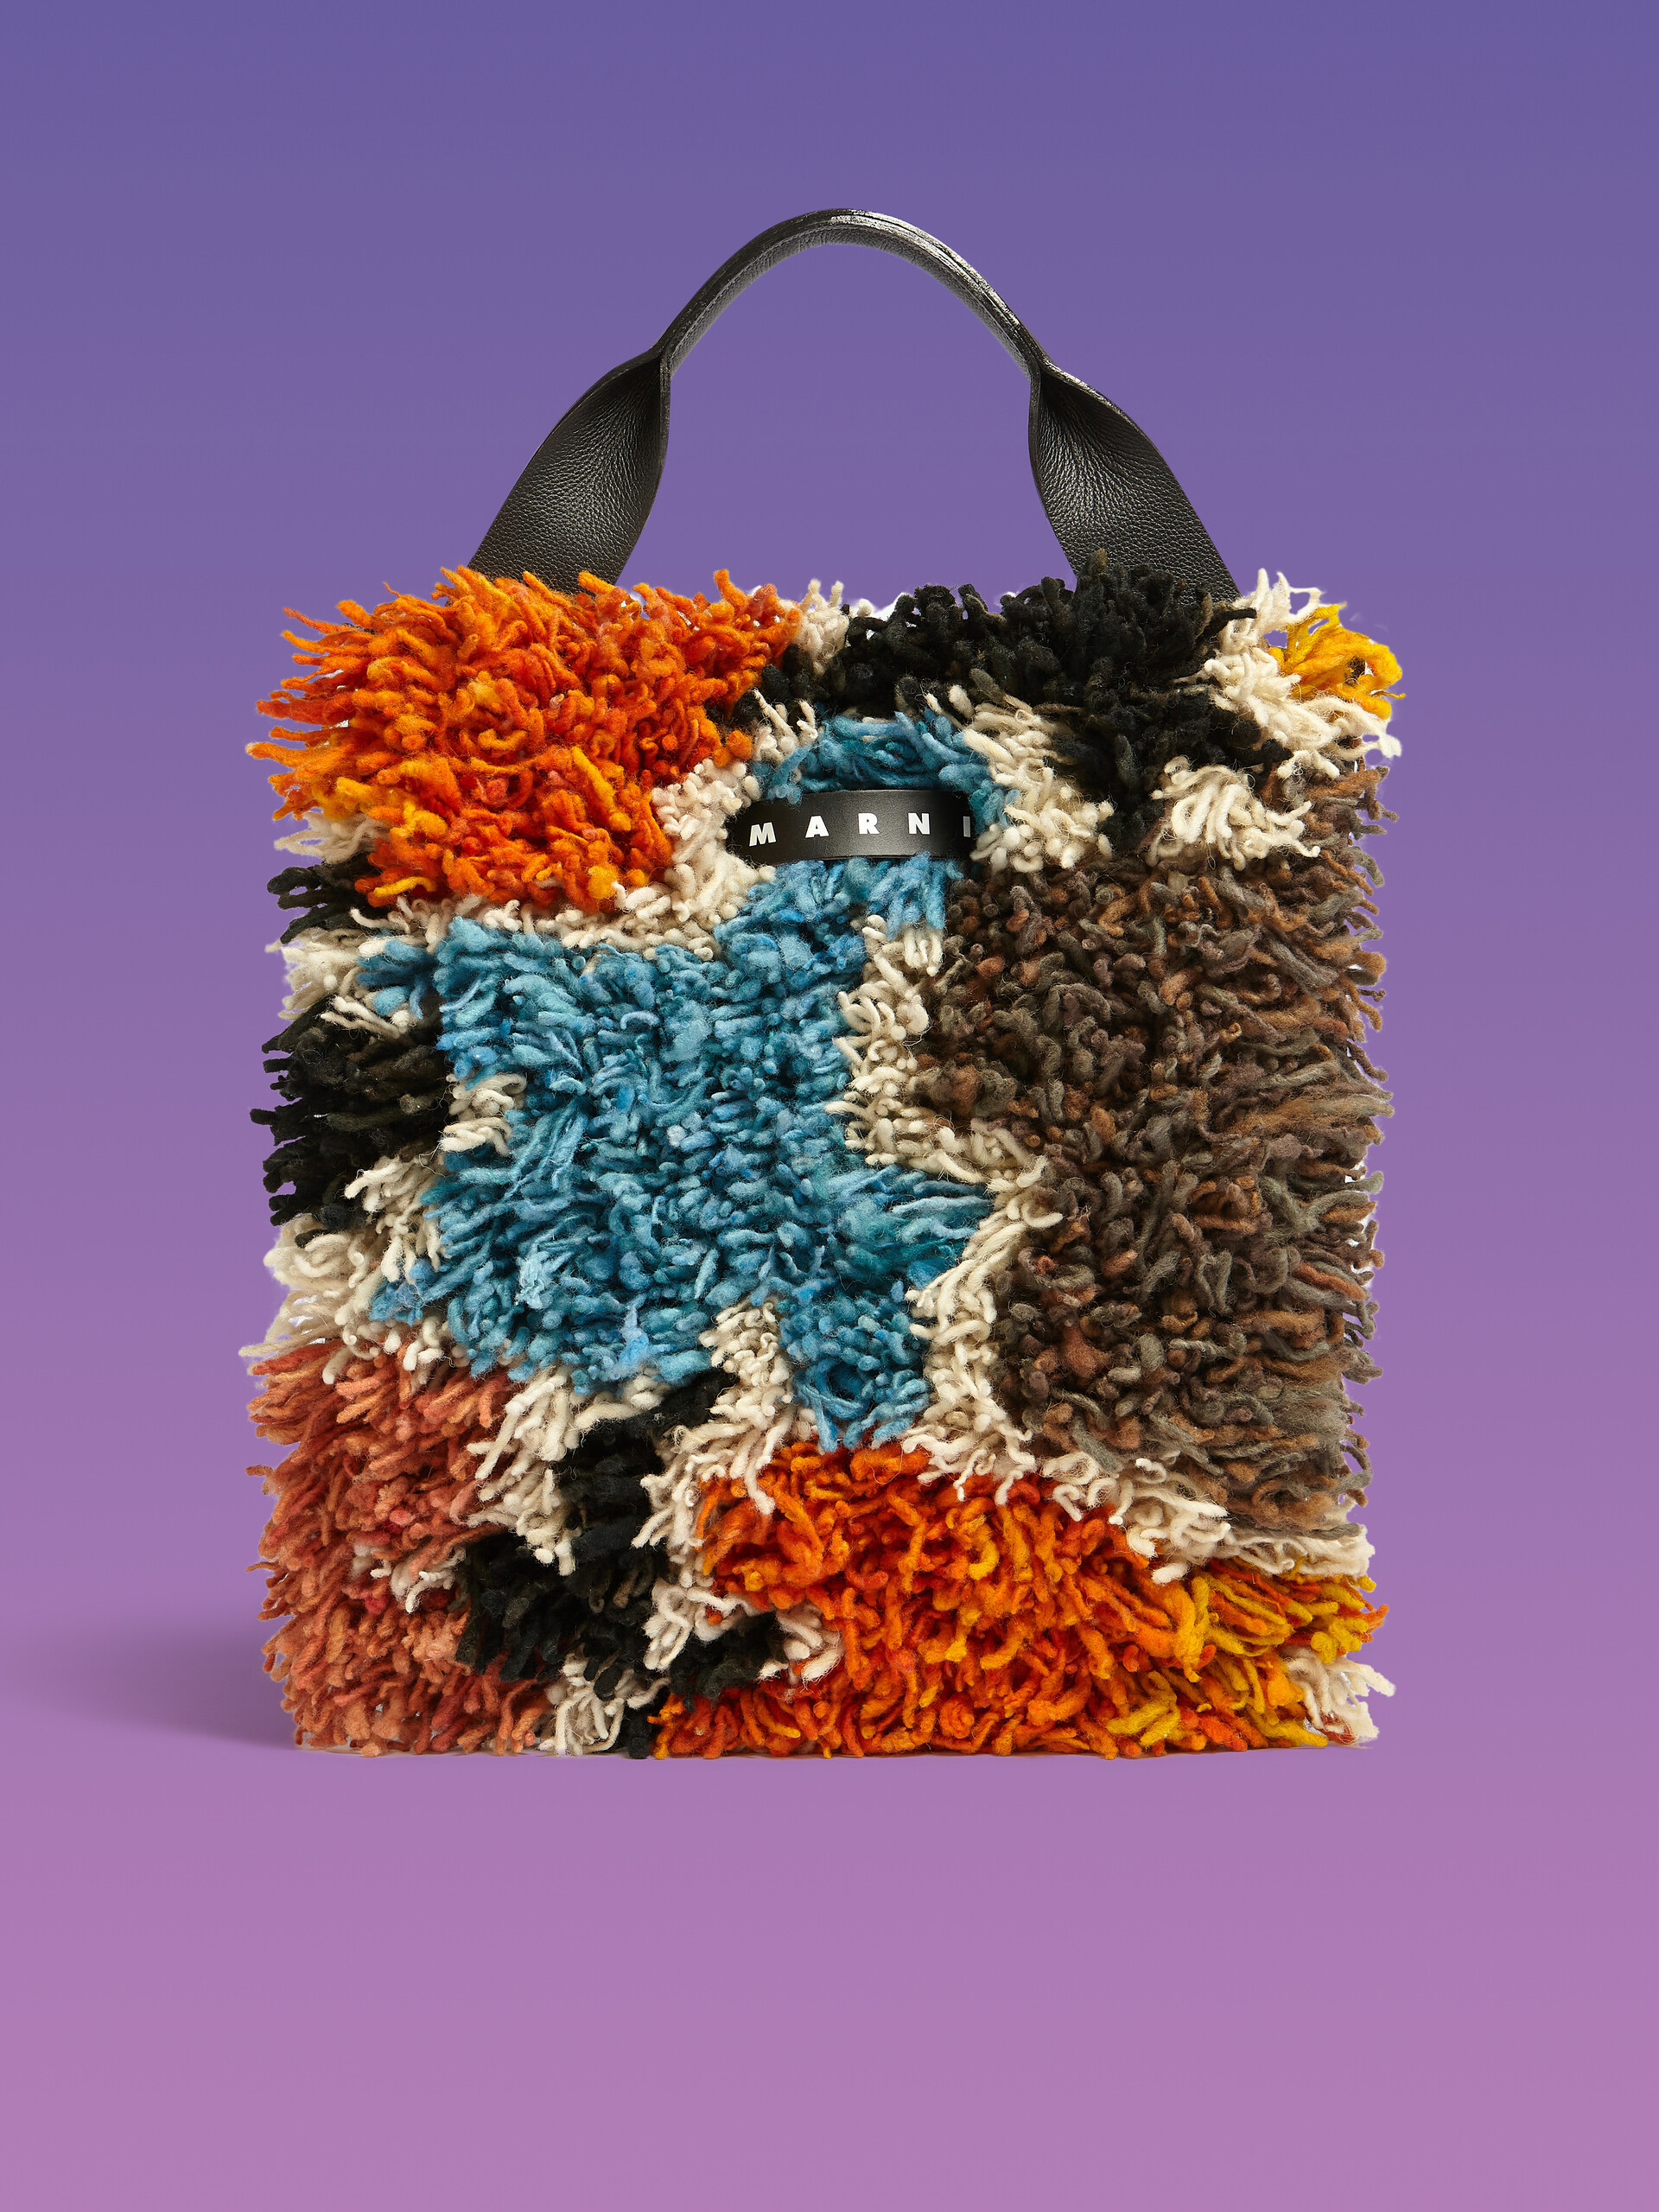 Borsa MARNI MARKET WOOL multicolore - Shopping Bags - Image 1